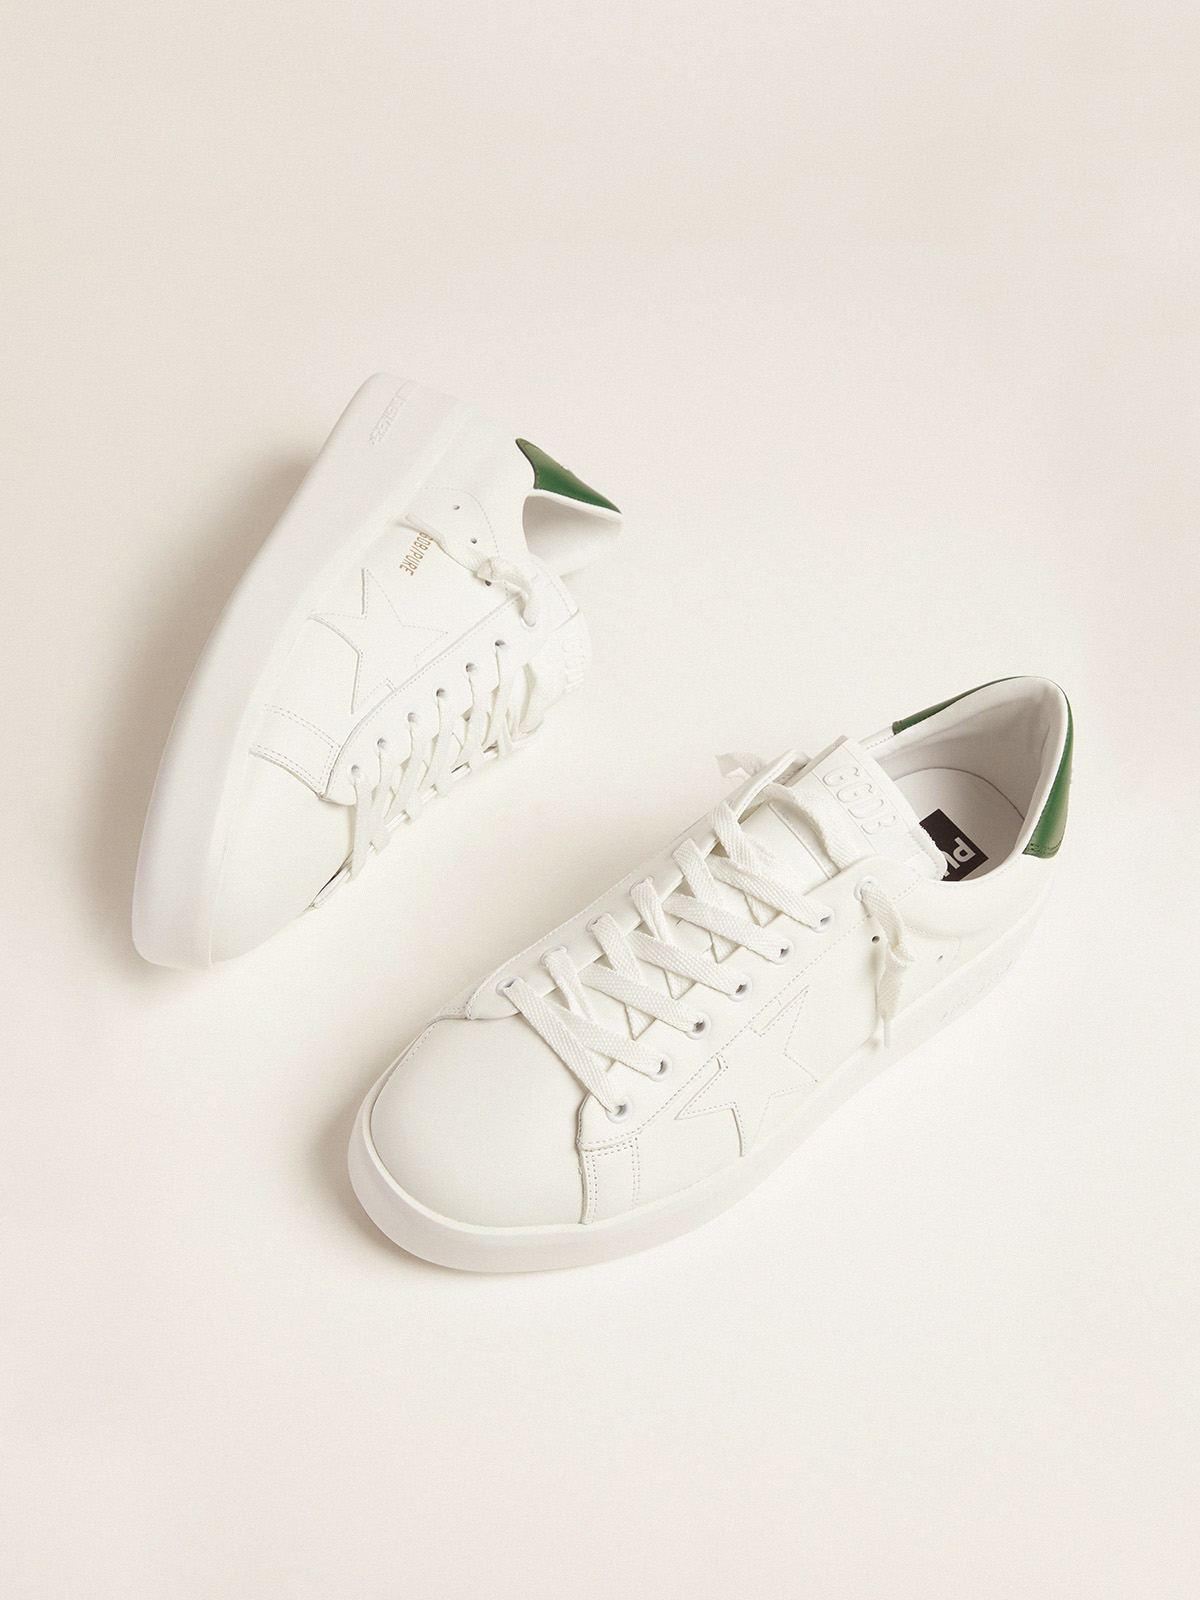 White Purestar sneakers with green heel tab | Golden Goose